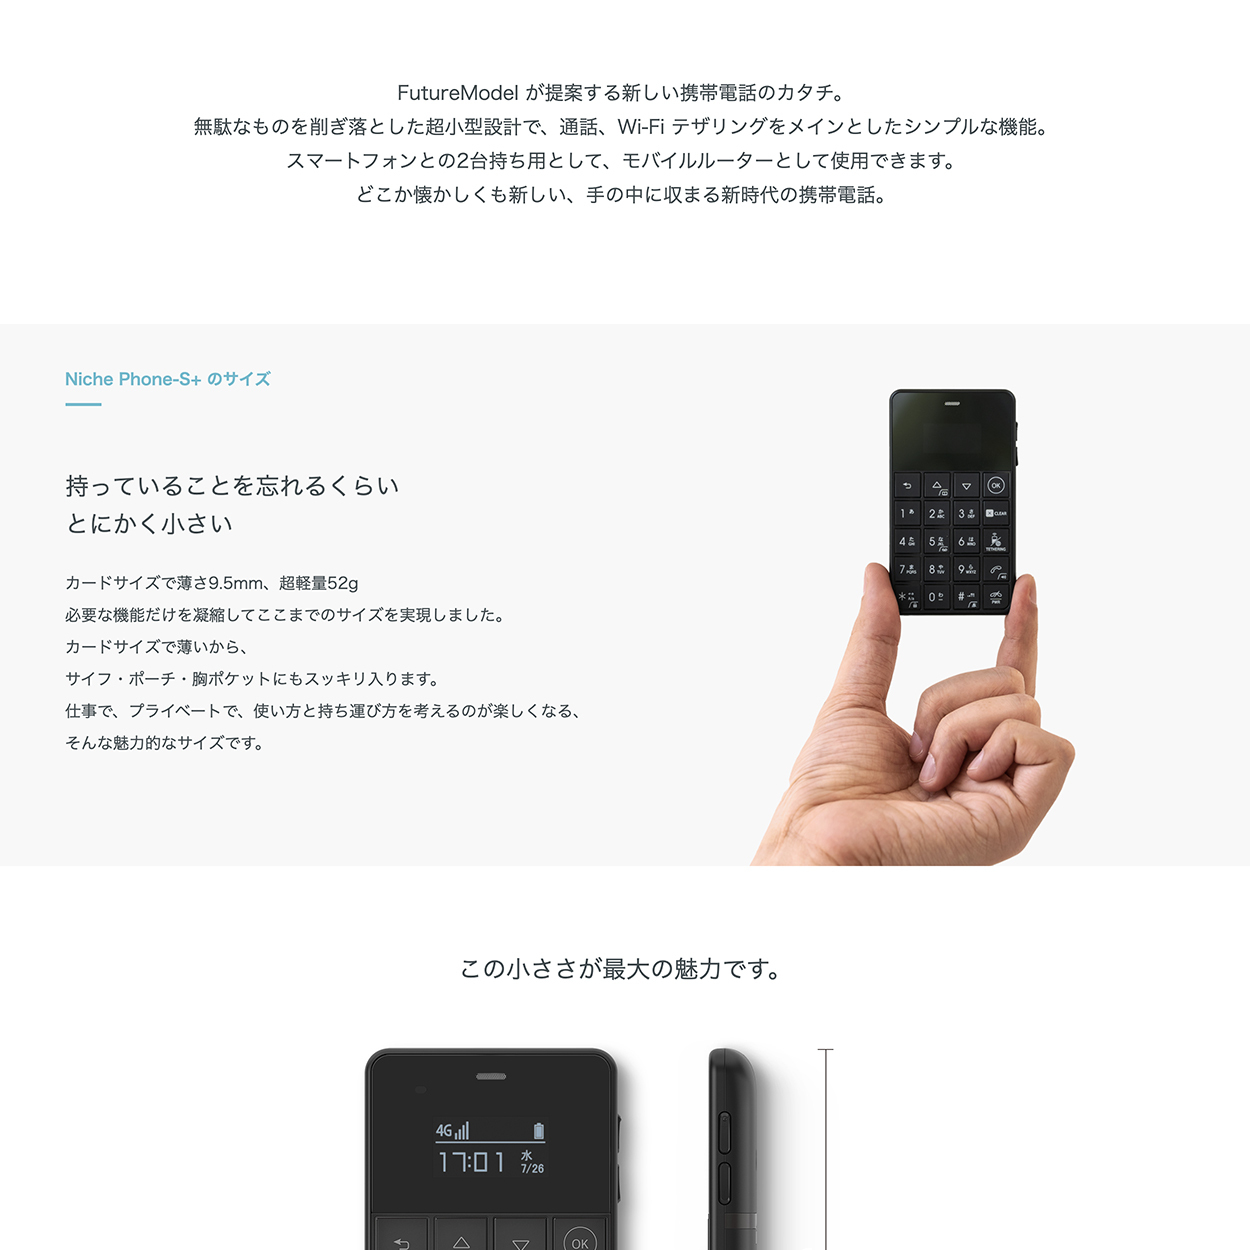 Niche Phone-S+ ニッチフォンエスプラス RED 限定レッド VoLTE対応 SIM 